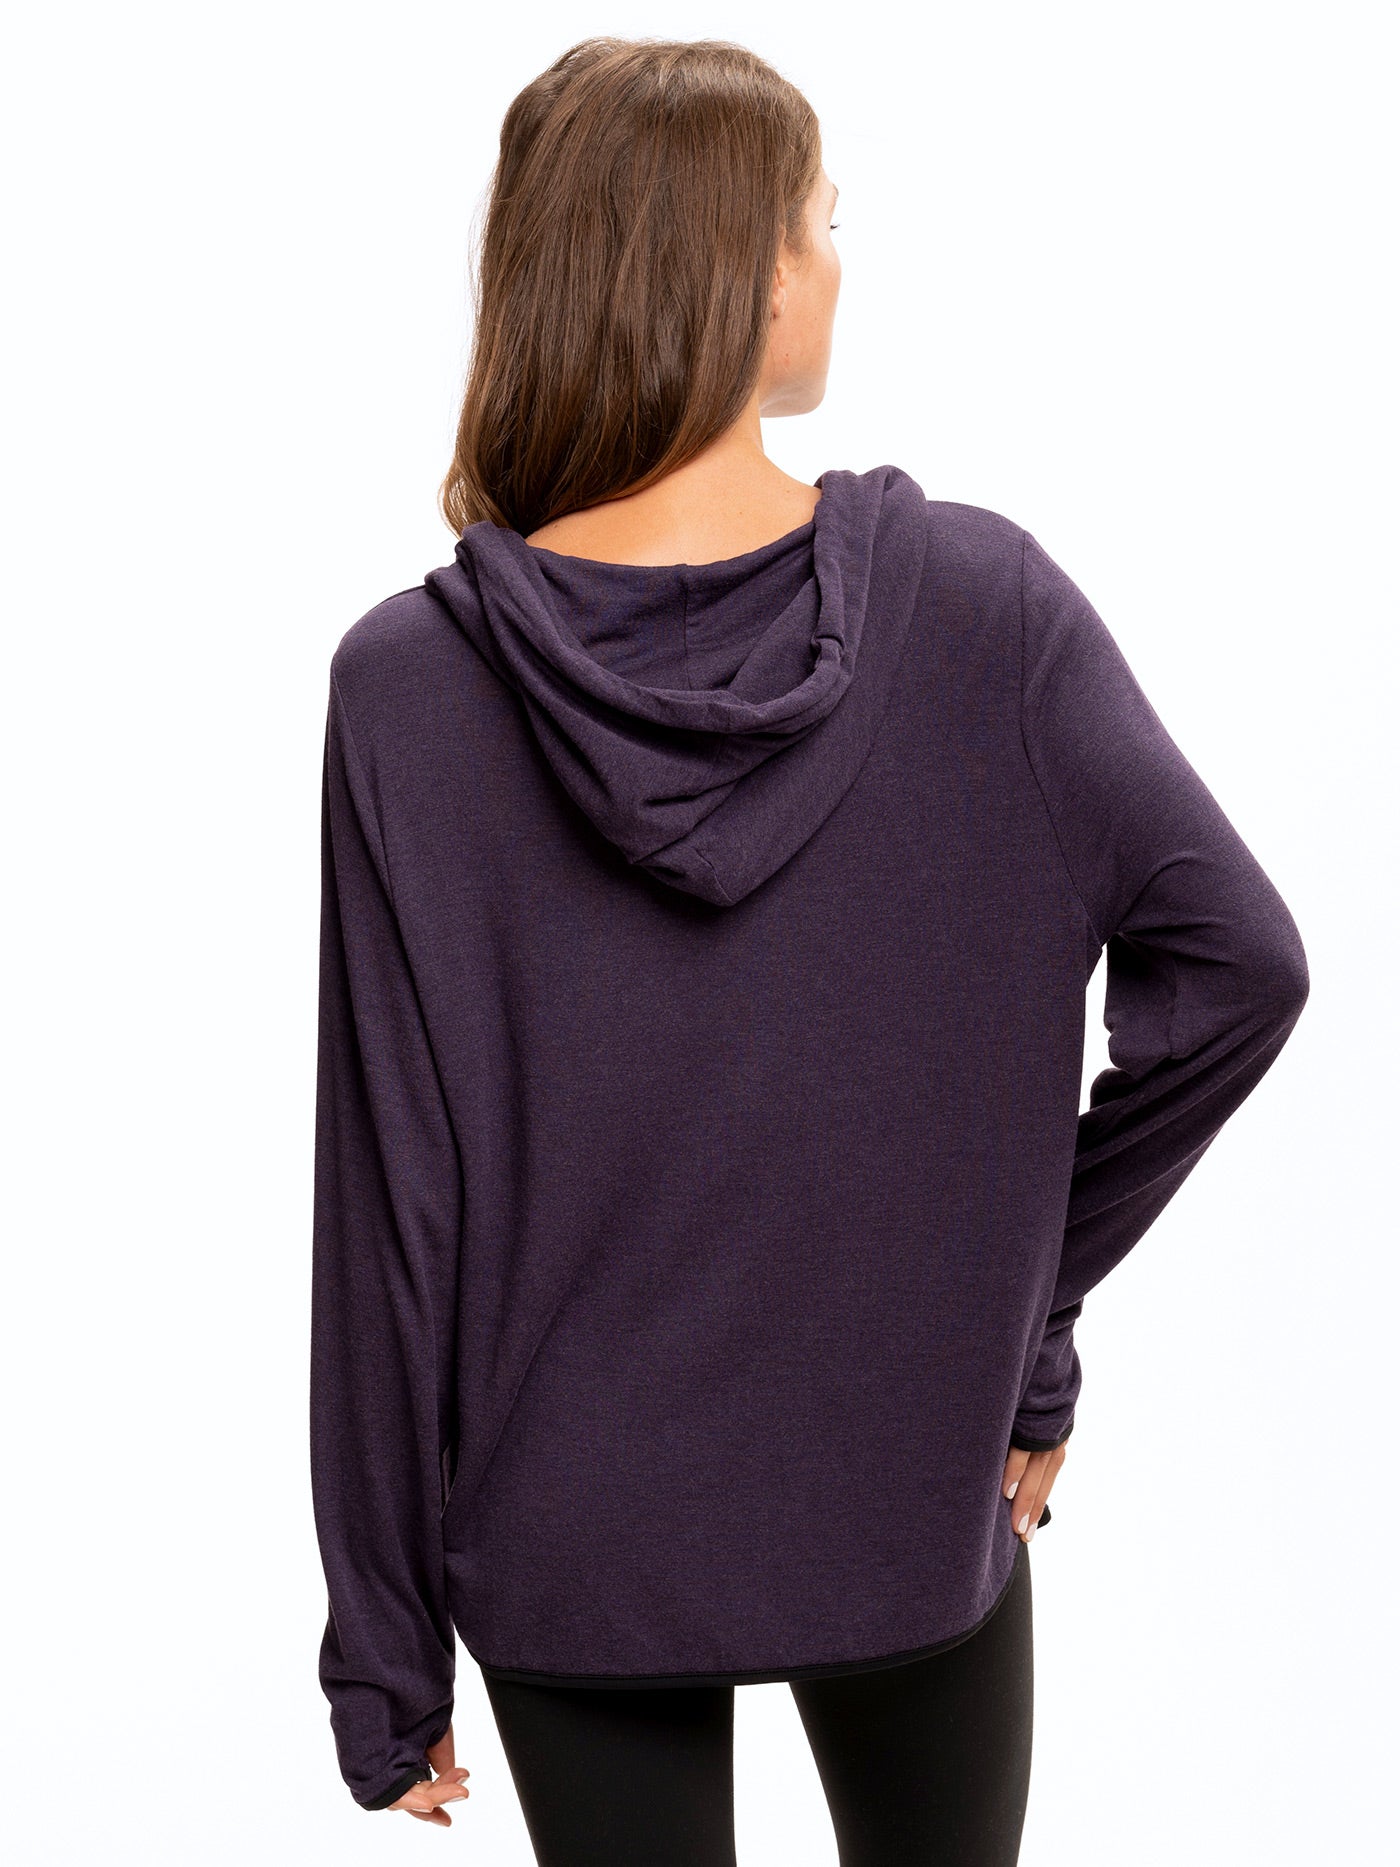 Sybil Athleisure Jacket Womens Outerwear Sweatshirt Threads 4 Thought 